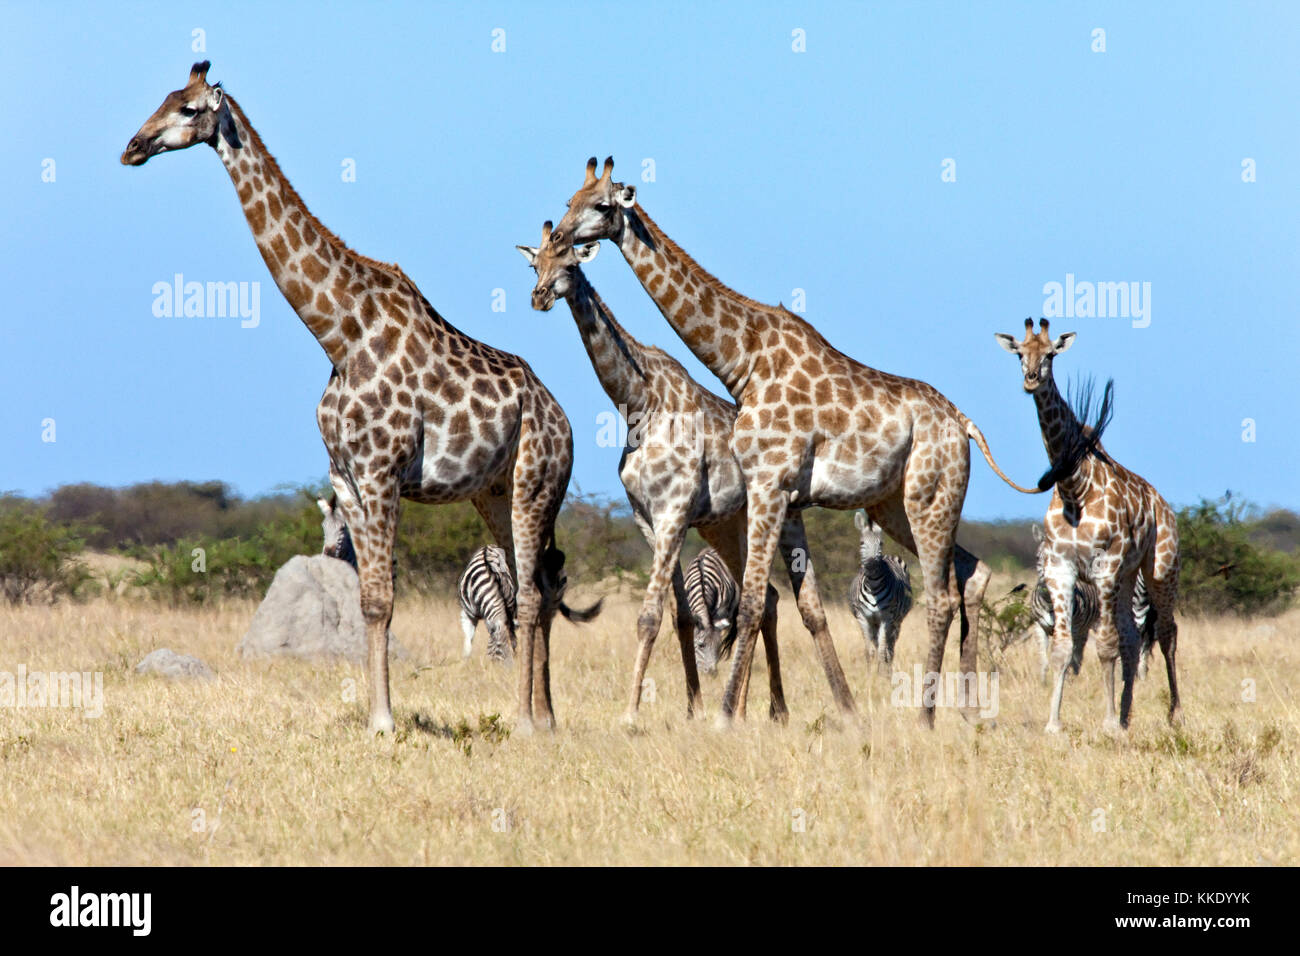 A group of Giraffe (Giraffa camelopardalis) shimmer in the heat in the Savuti region of northern Botswana. Stock Photo